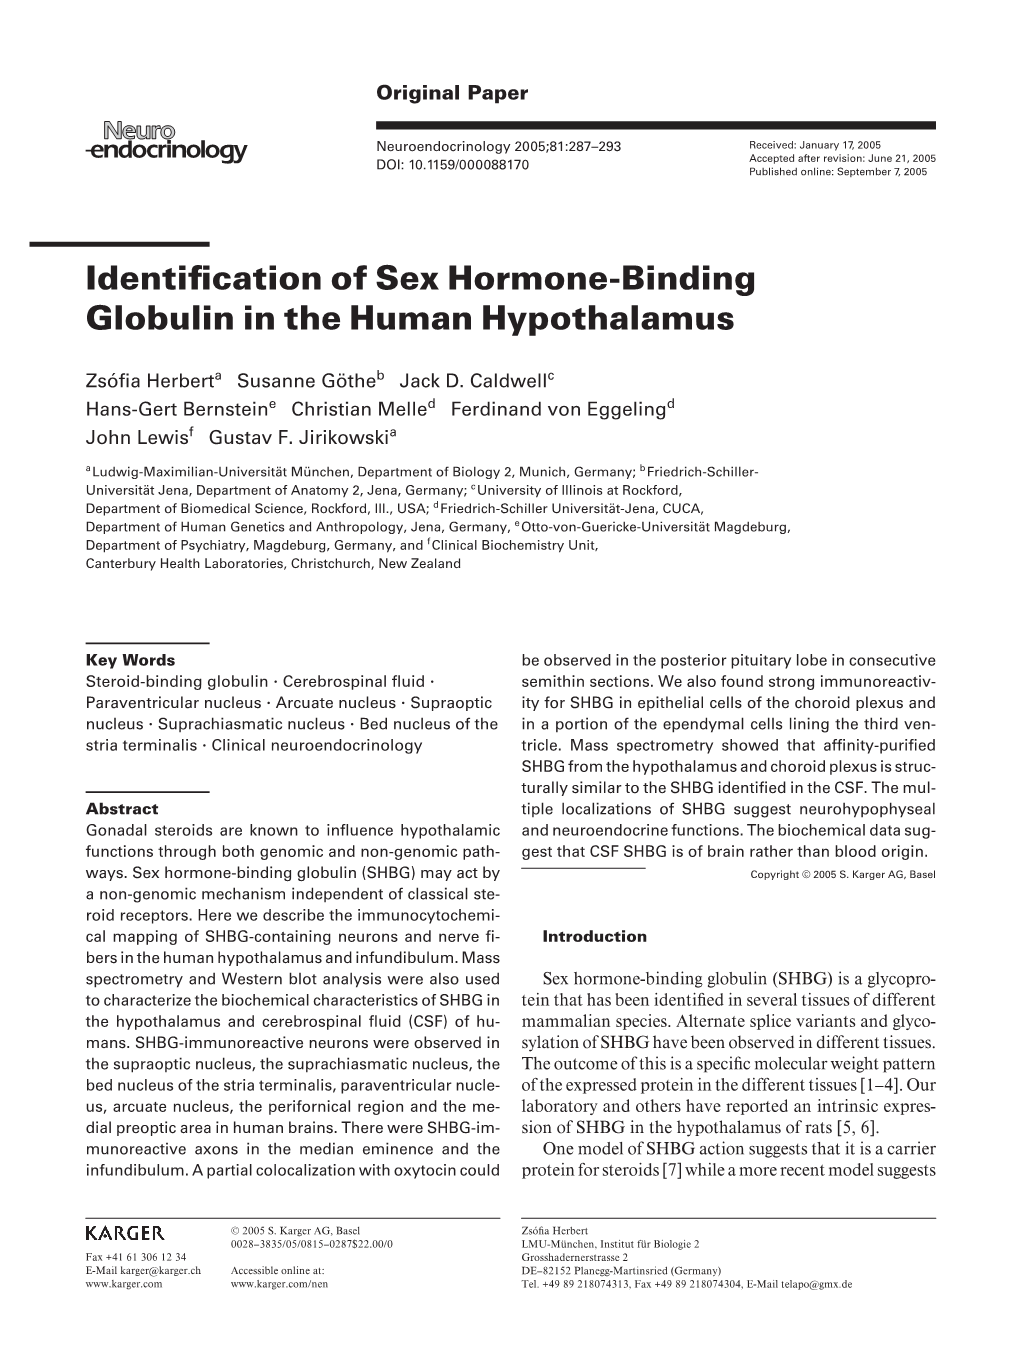 Identification of Sex Hormone-Binding Globulin in the Human Hypothalamus